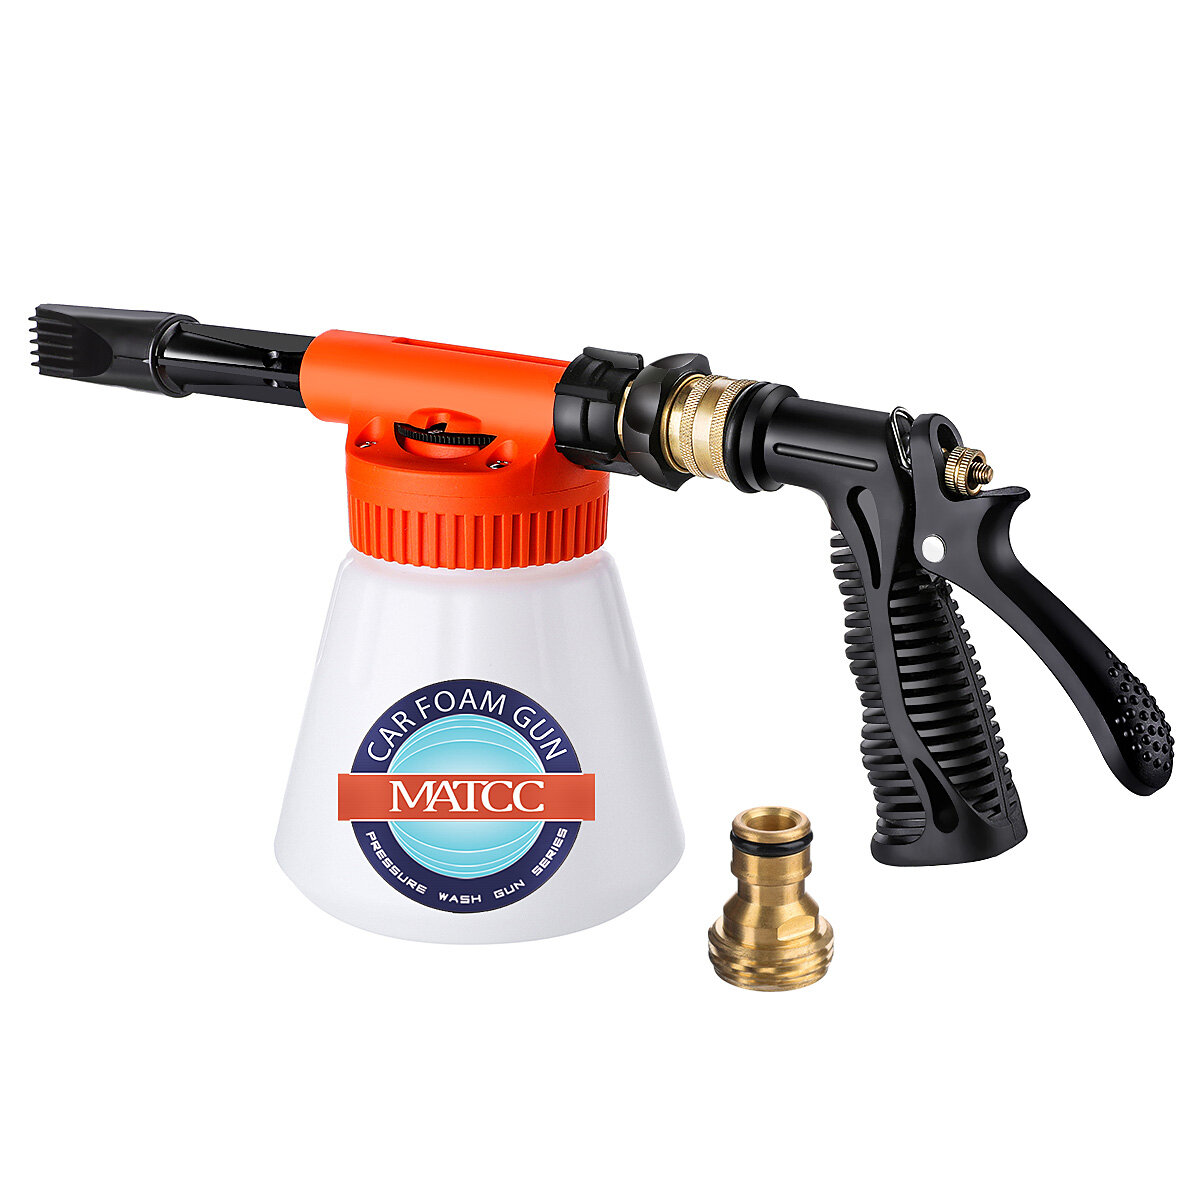 MATCC Car Foam Gun Foam and Adjustable Car Wash Sprayer with Adjustment Ratio Dial Foam Sprayer Fit Garden Hose for Car